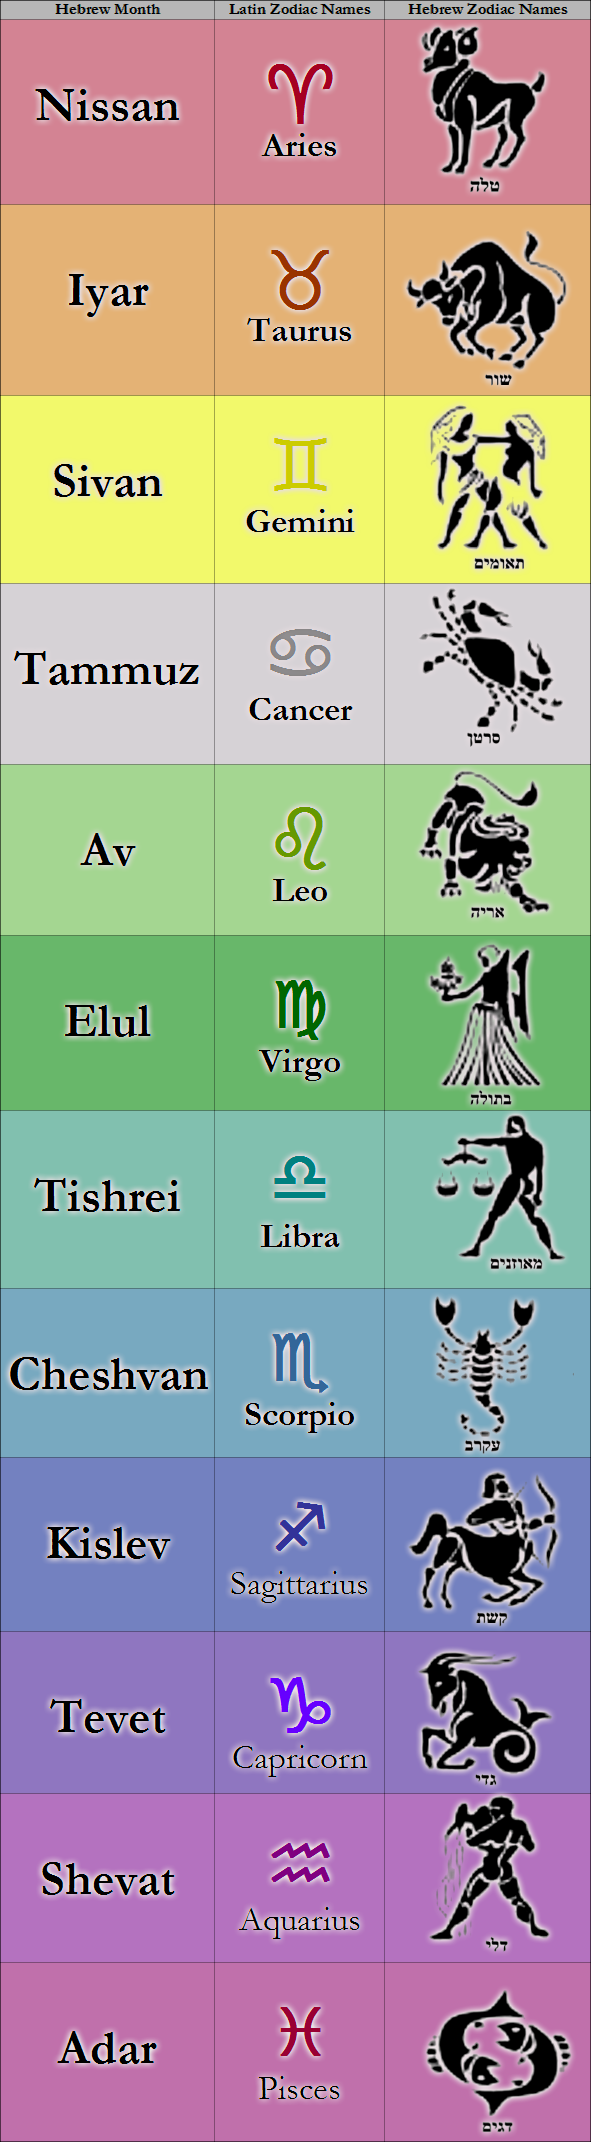 Hebrew Zodiac Signs HS Astrology Zodiac Signs